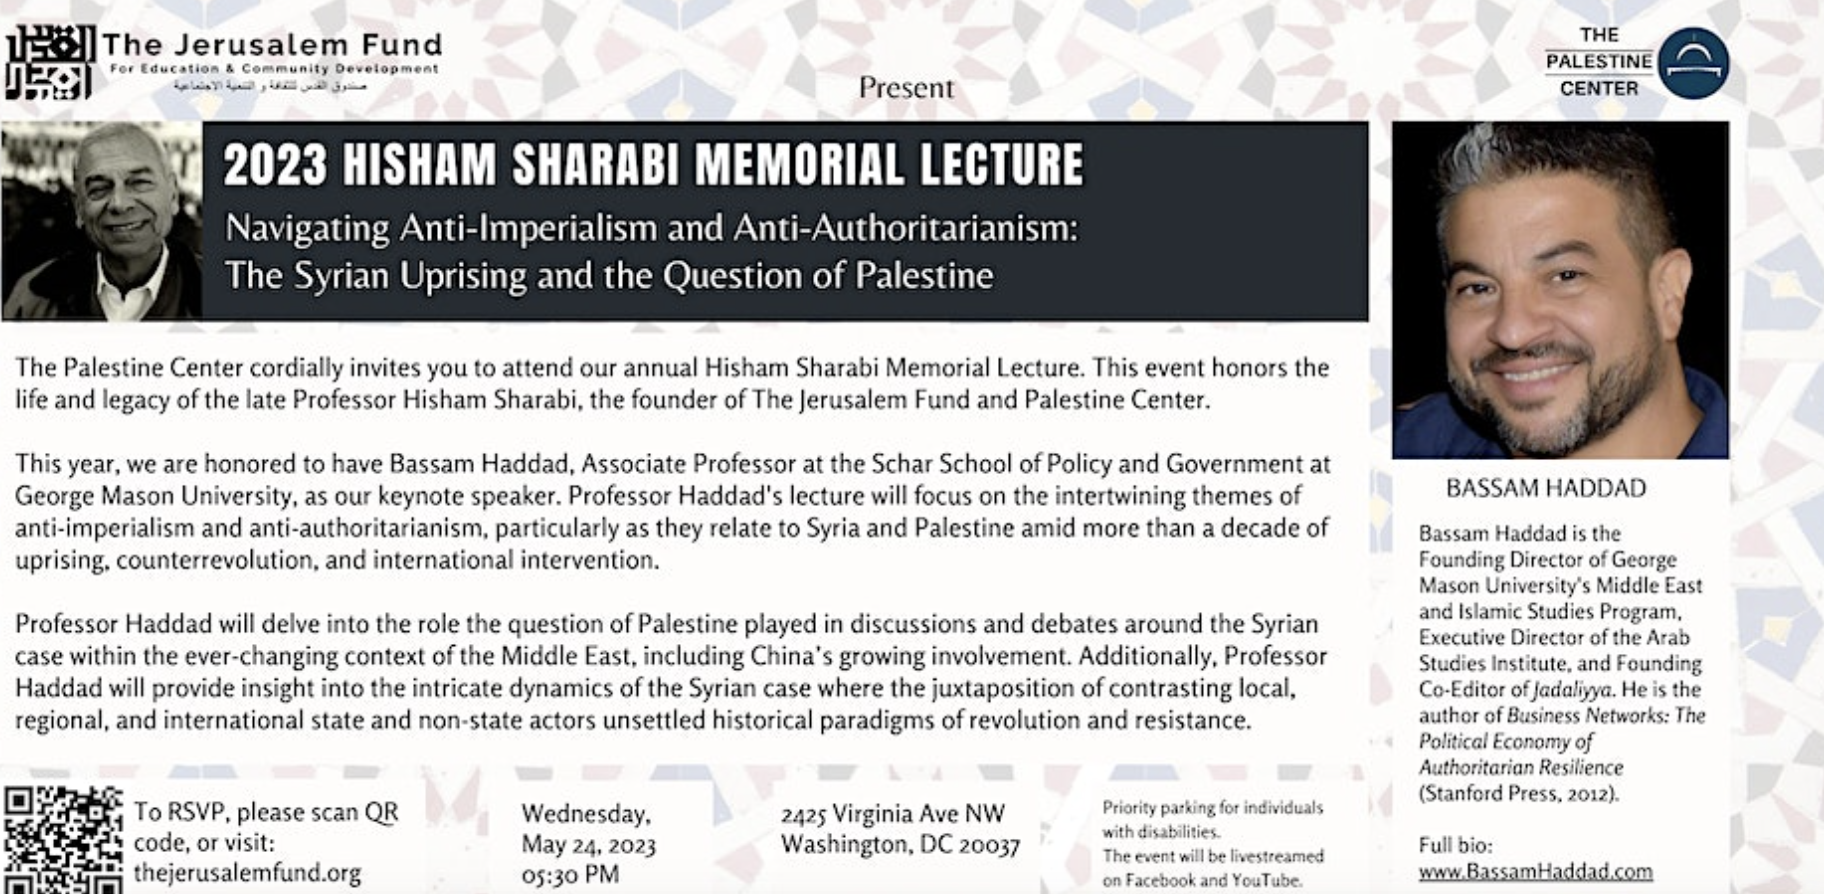 2023 Hisham Sharabi Memorial Lecture: Featuring Professor Bassam Haddad